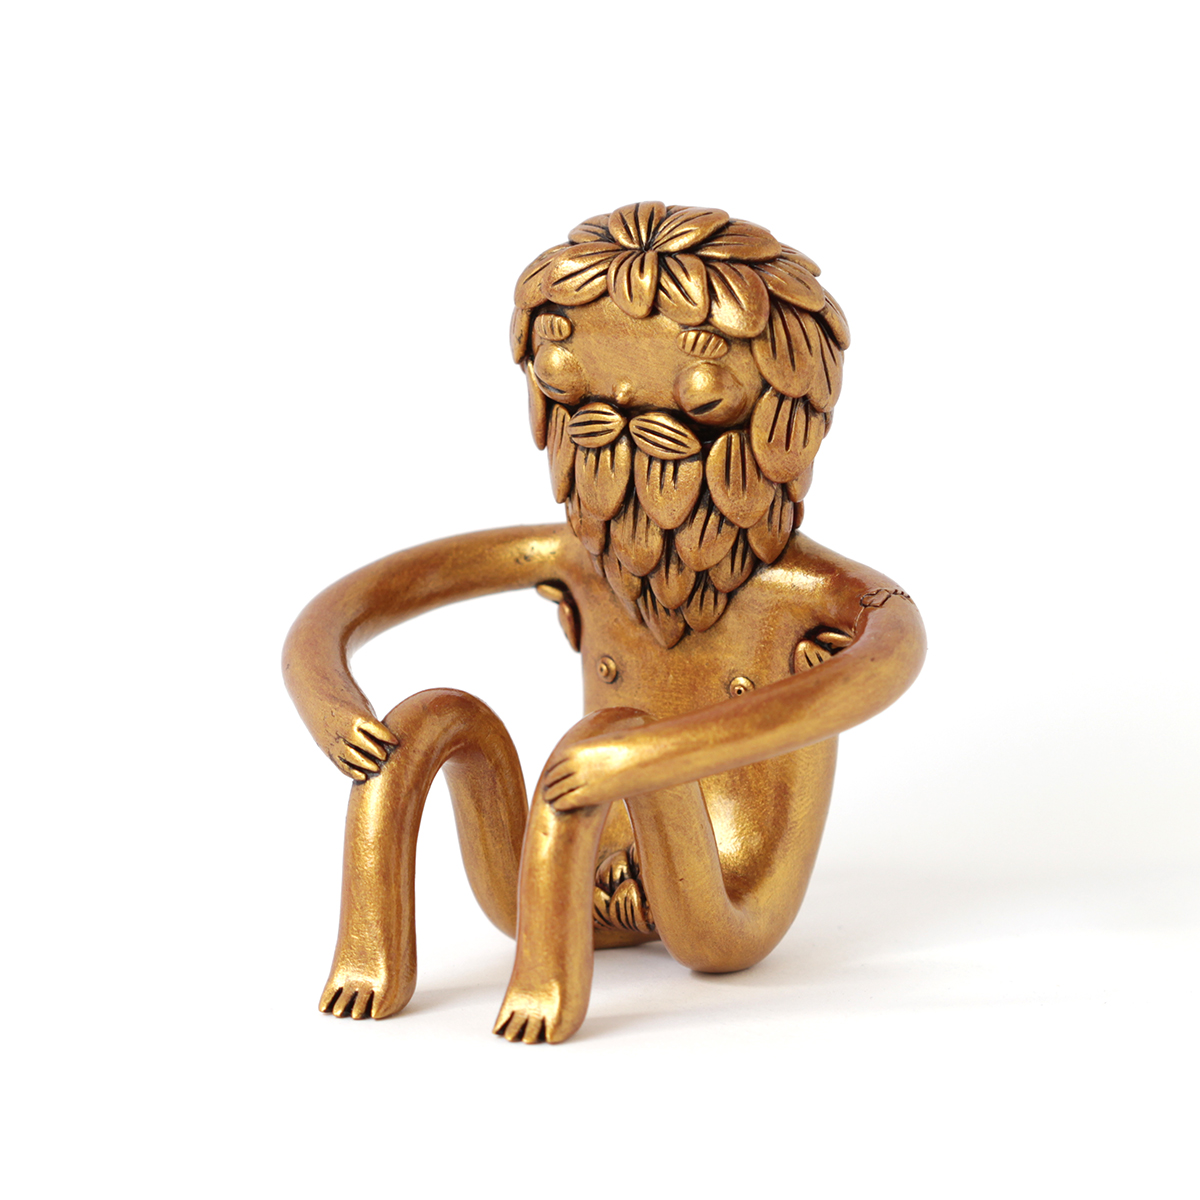 Golden polymer clay sculpture of an hermaphrodite being